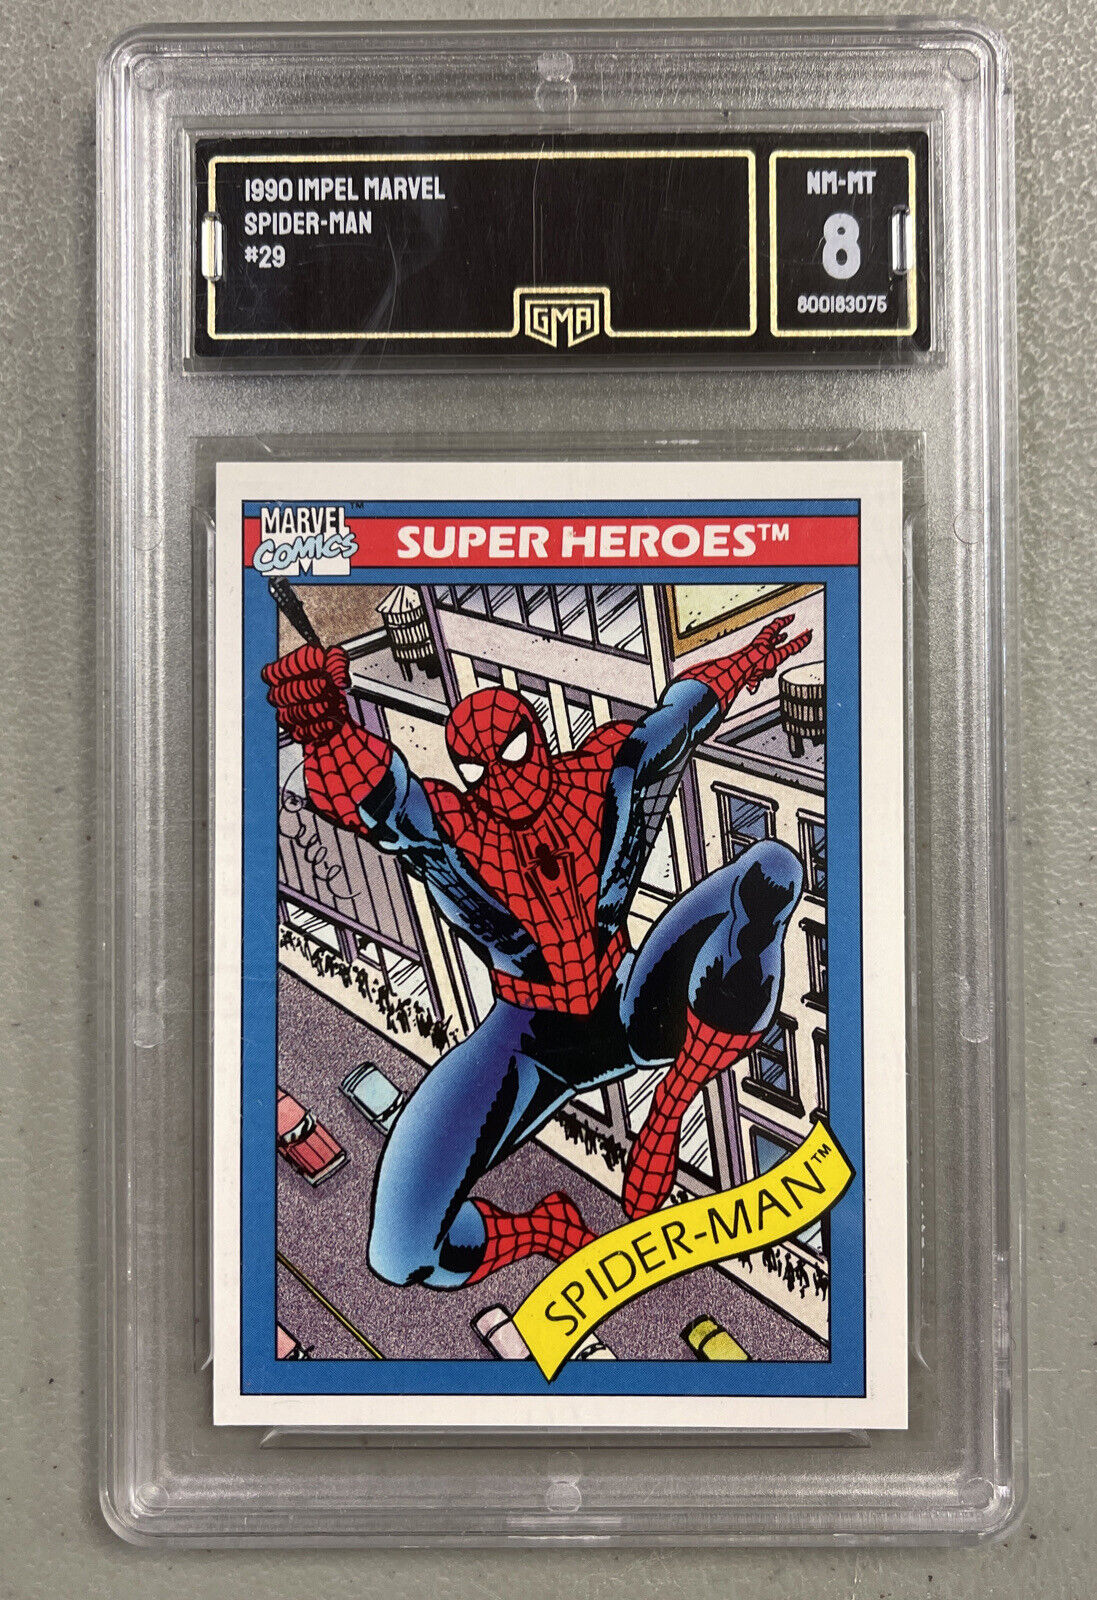 Marvel Super Heroes 1990 Spider-Man #29 GMA 8